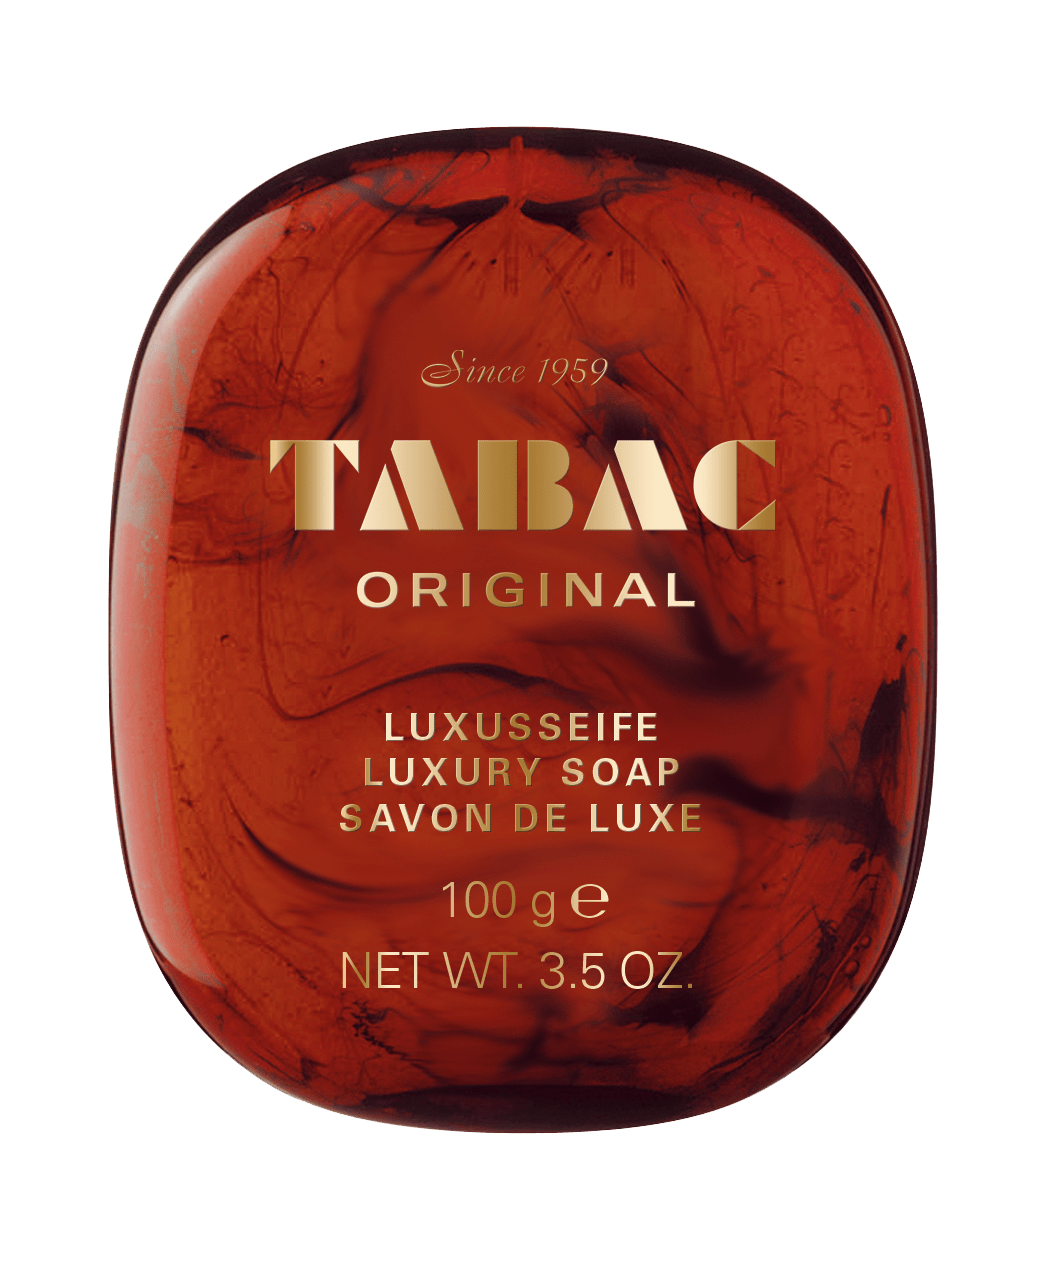 TABAC ORIGINAL Luxury Soap 100g Solid Soap Bar55022 - Jashanmal Home